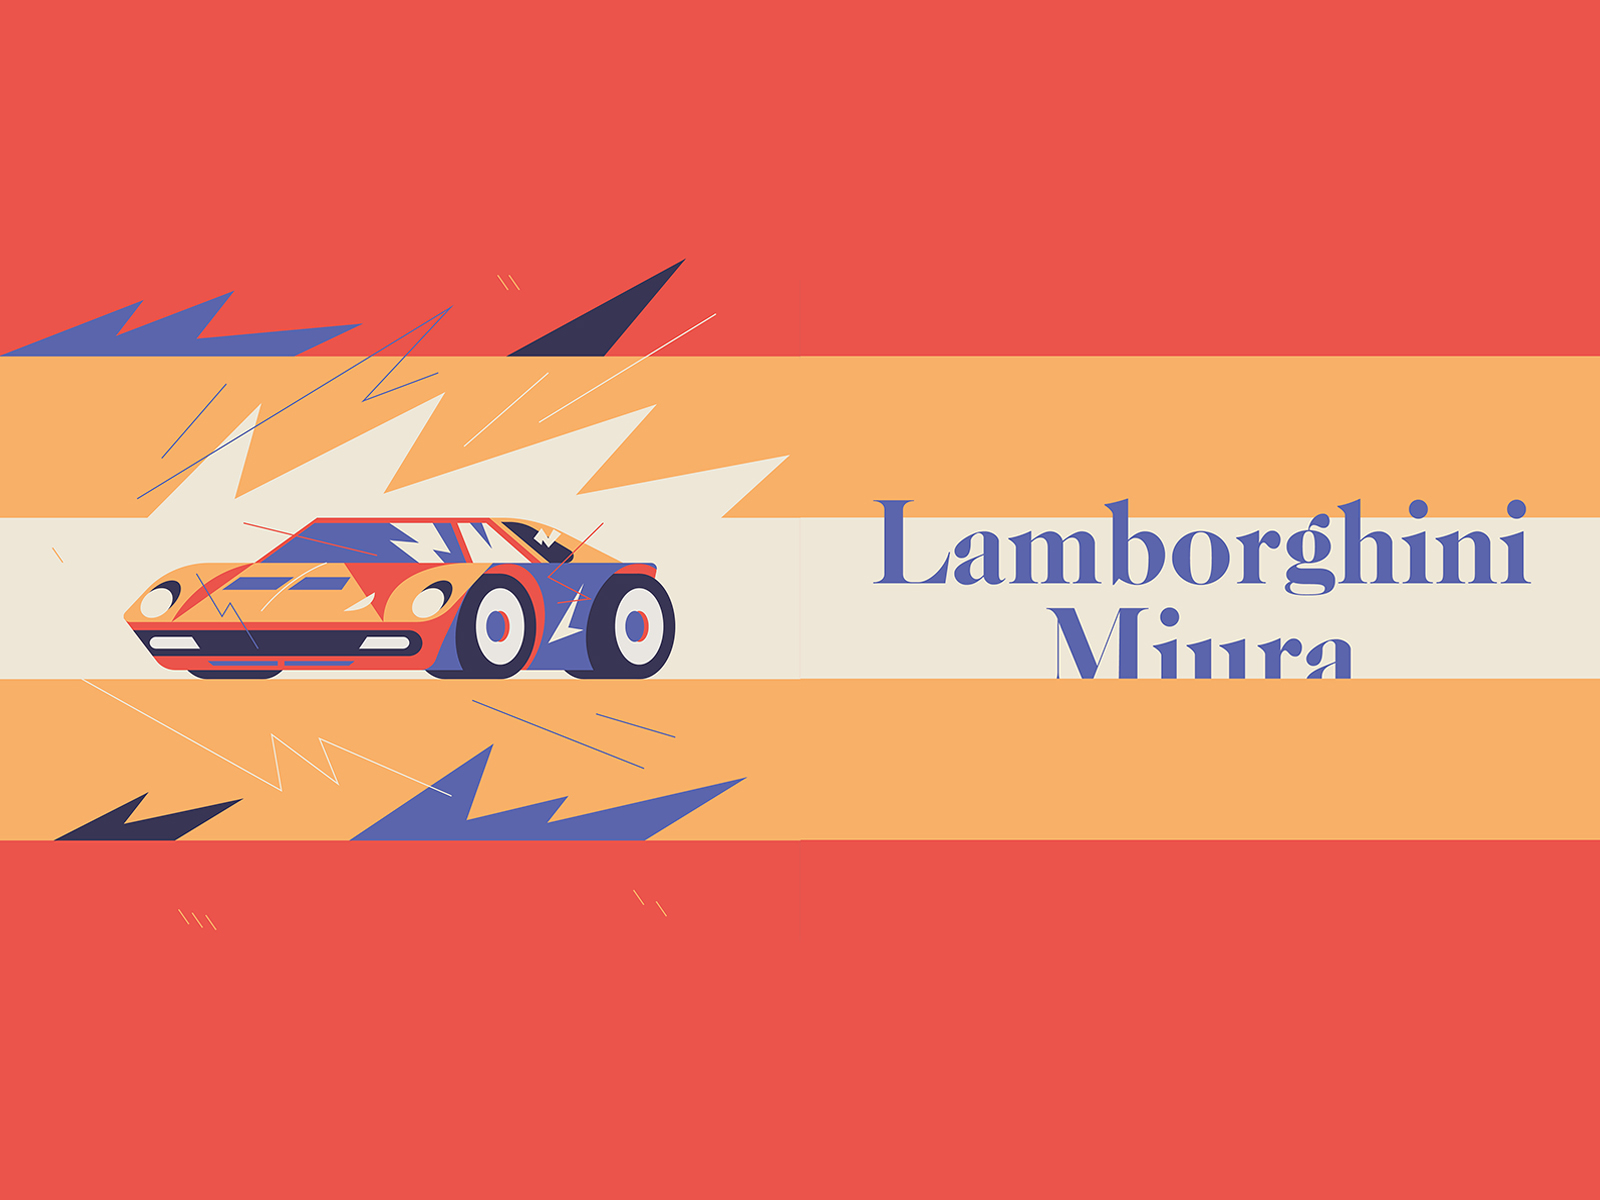 Lamborghini Miura by Mr. Panesar, Illustration & Design on Dribbble